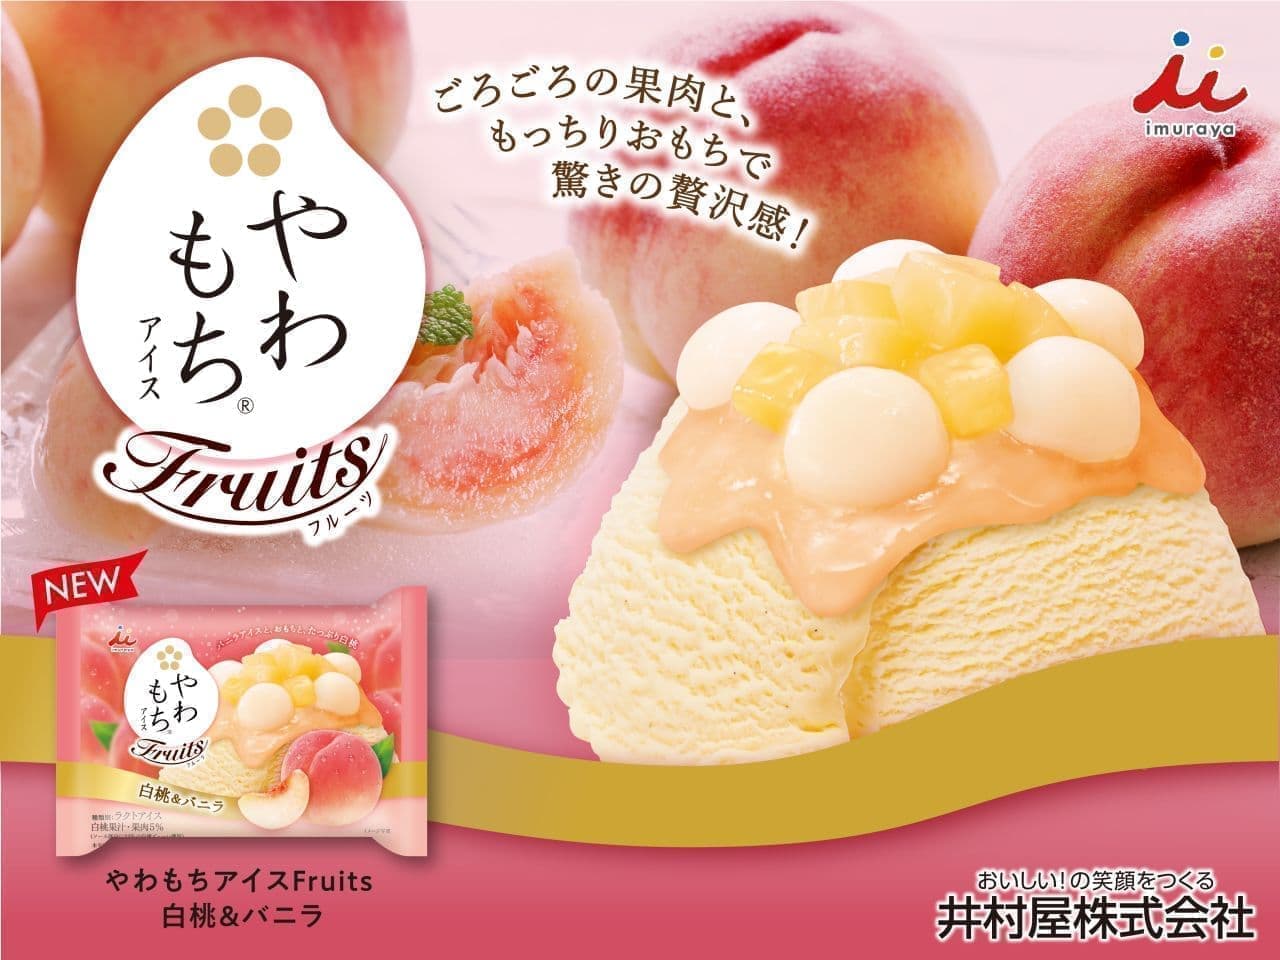 Imuraya "Yawamochi Ice Fruits White Peach & Vanilla"